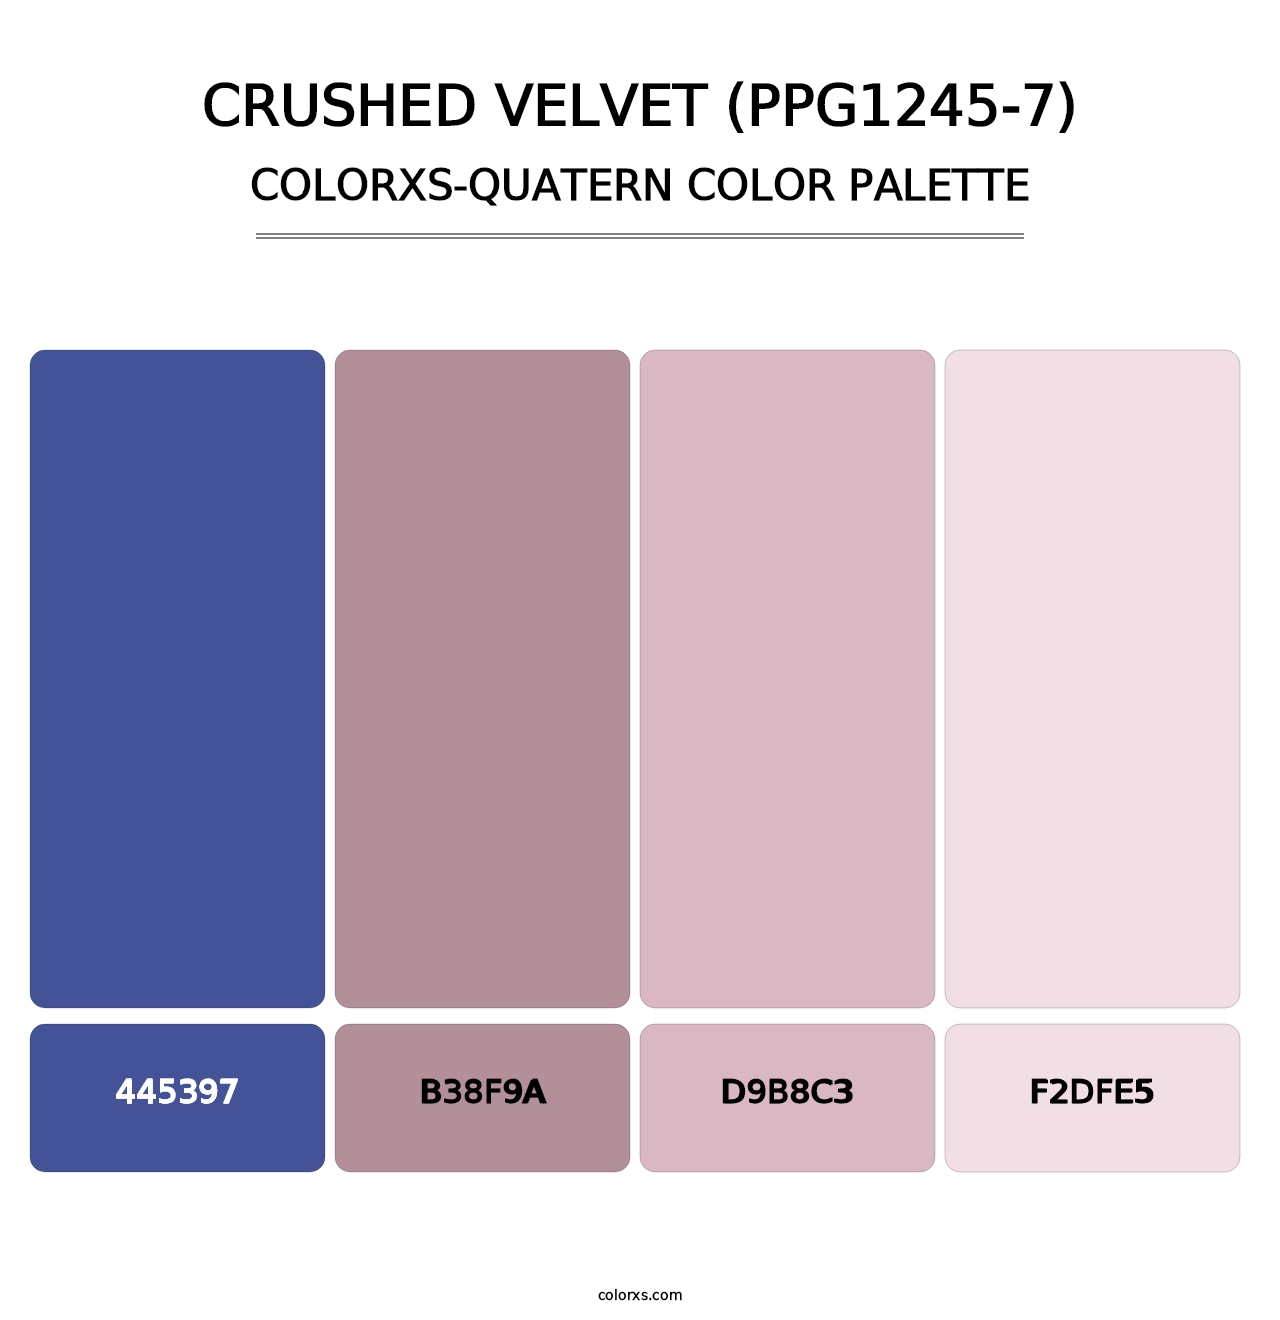 Crushed Velvet (PPG1245-7) - Colorxs Quatern Palette